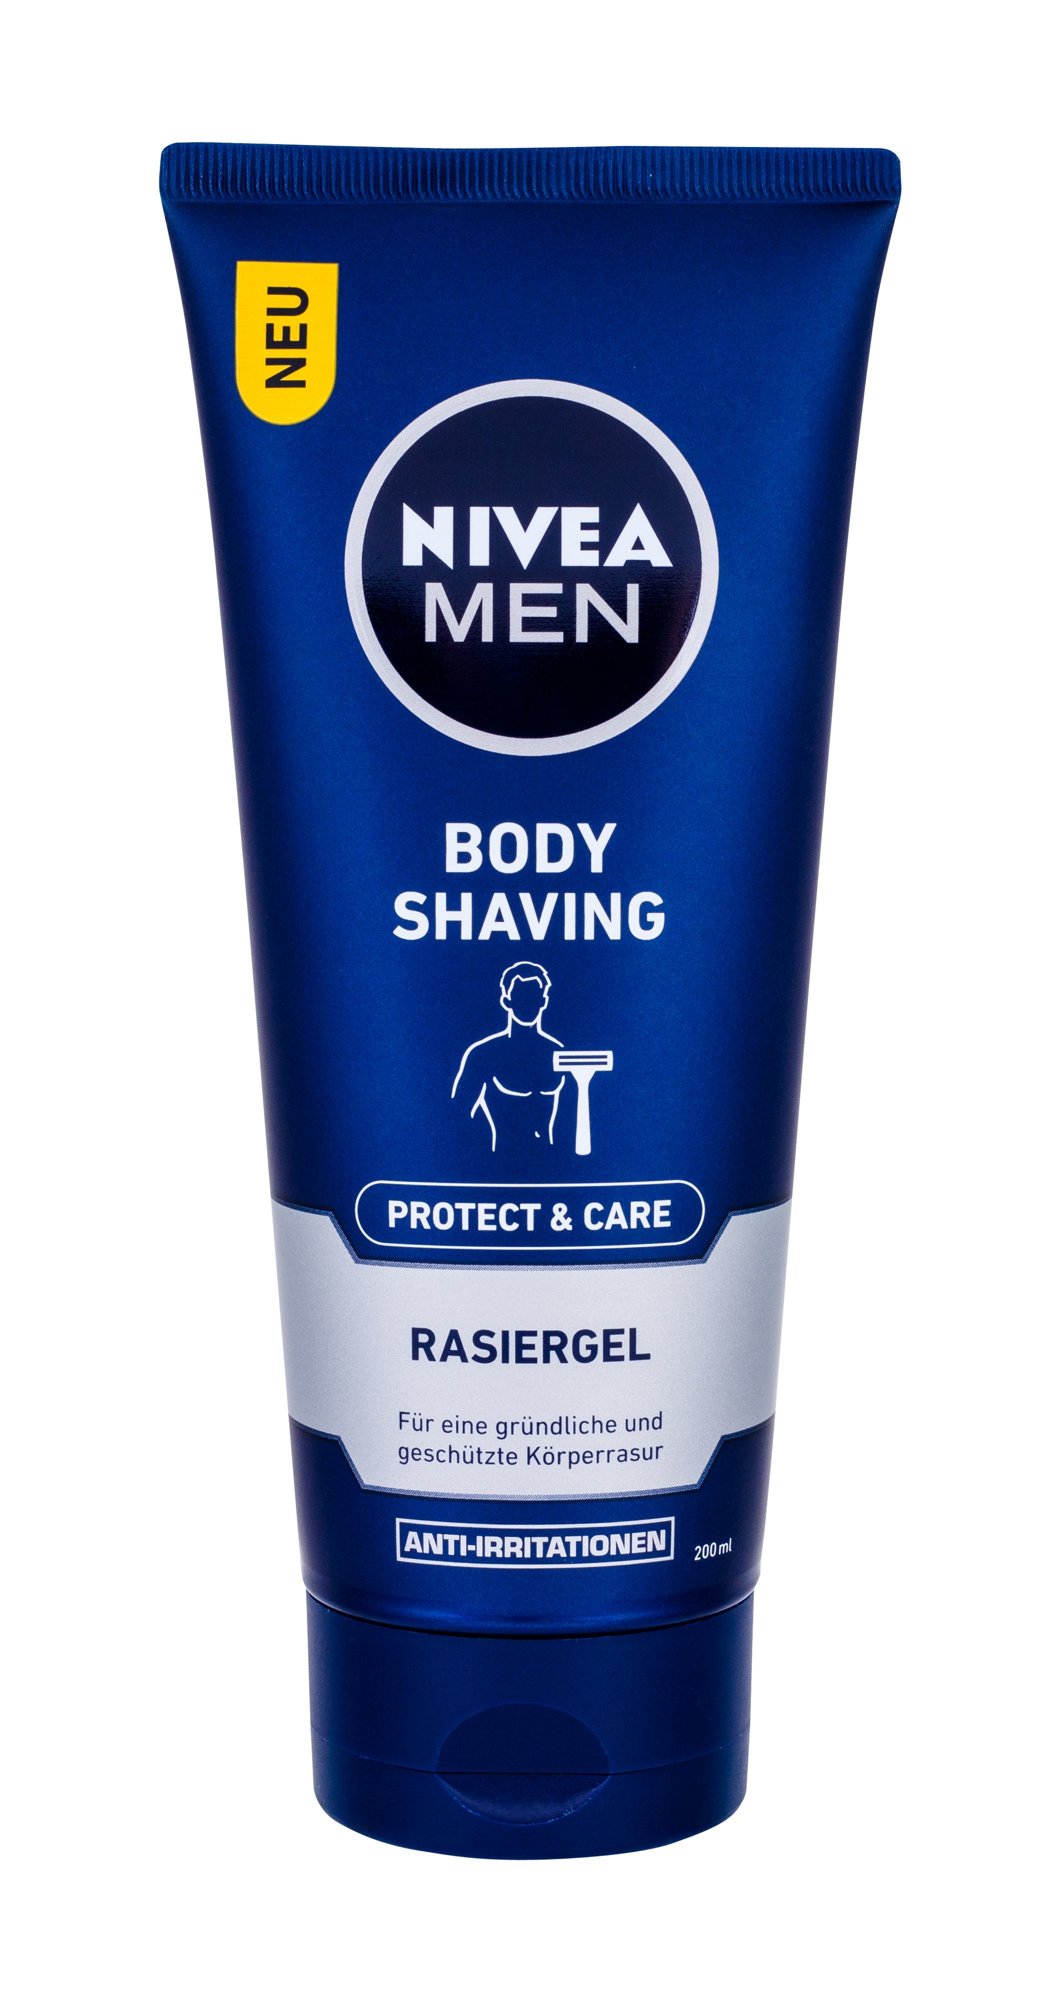 Nivea Men Protect & Care Body Shaving skutimosi gelis